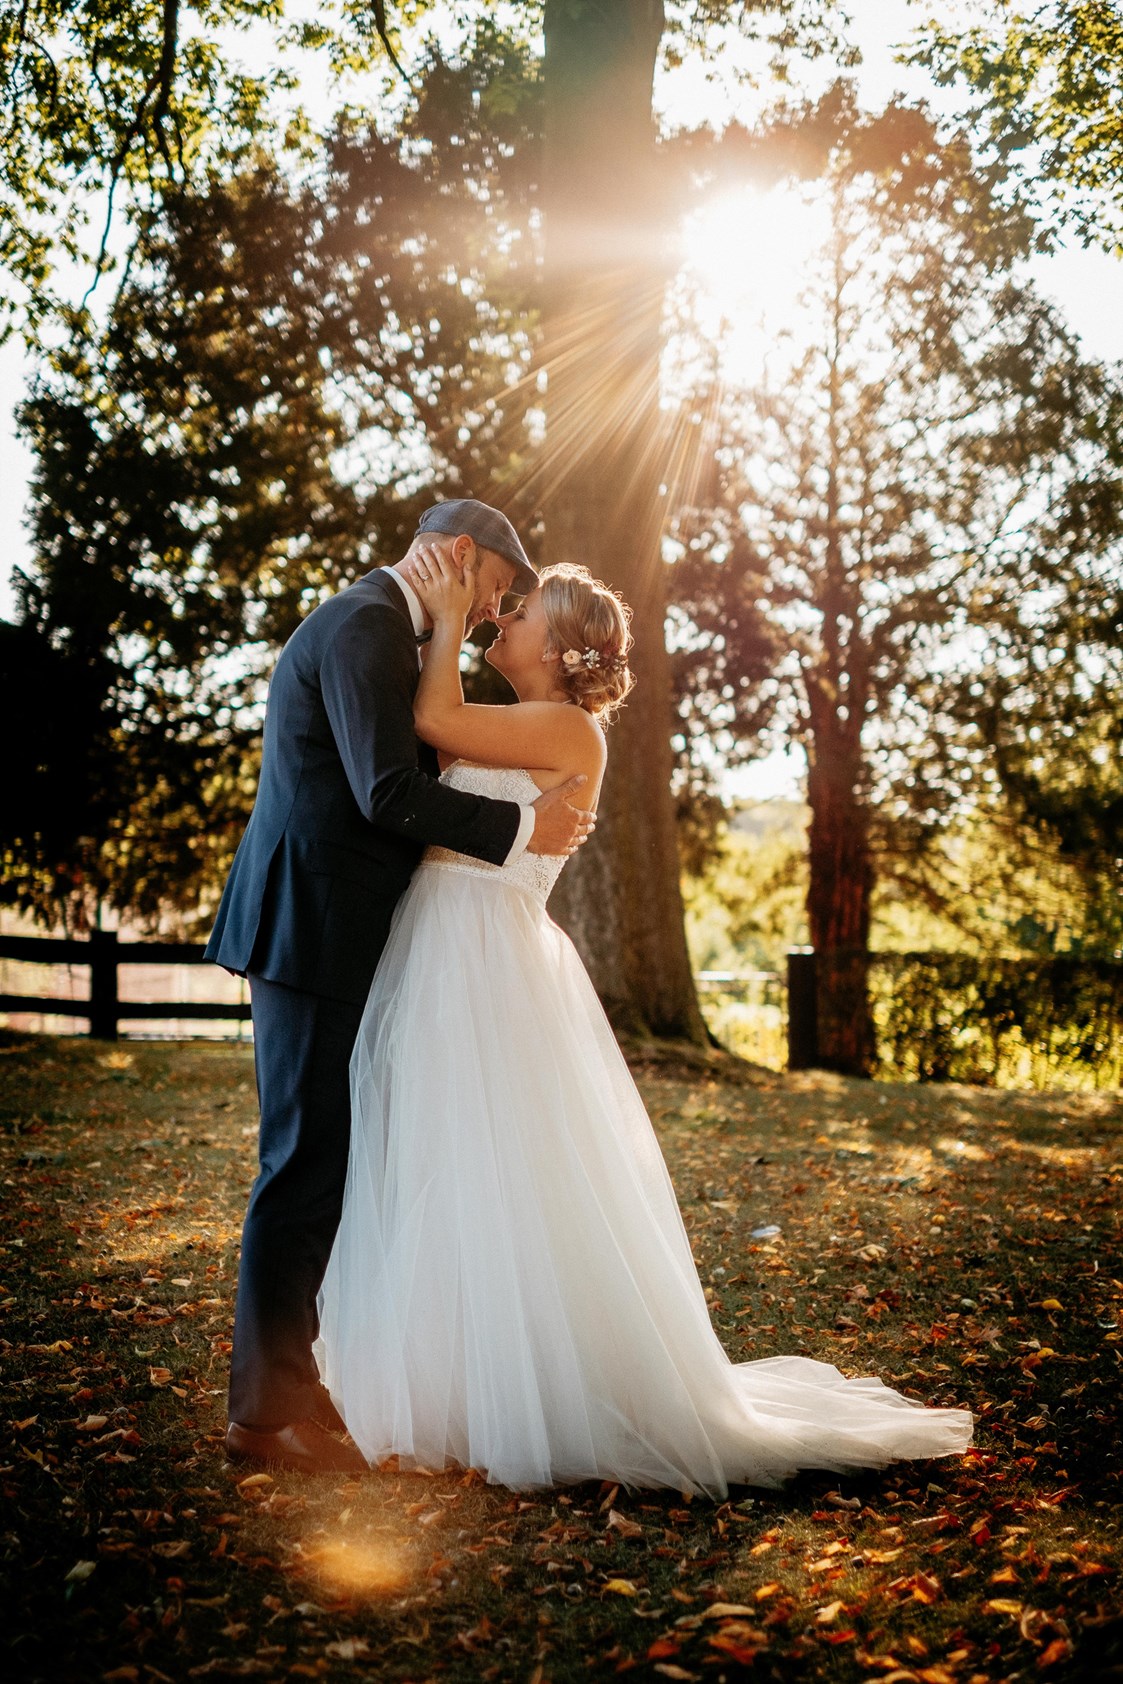 Hochzeitsfotograf: Brautpaarshooting im Freien - A LOVE above photography by Kevin Kurek